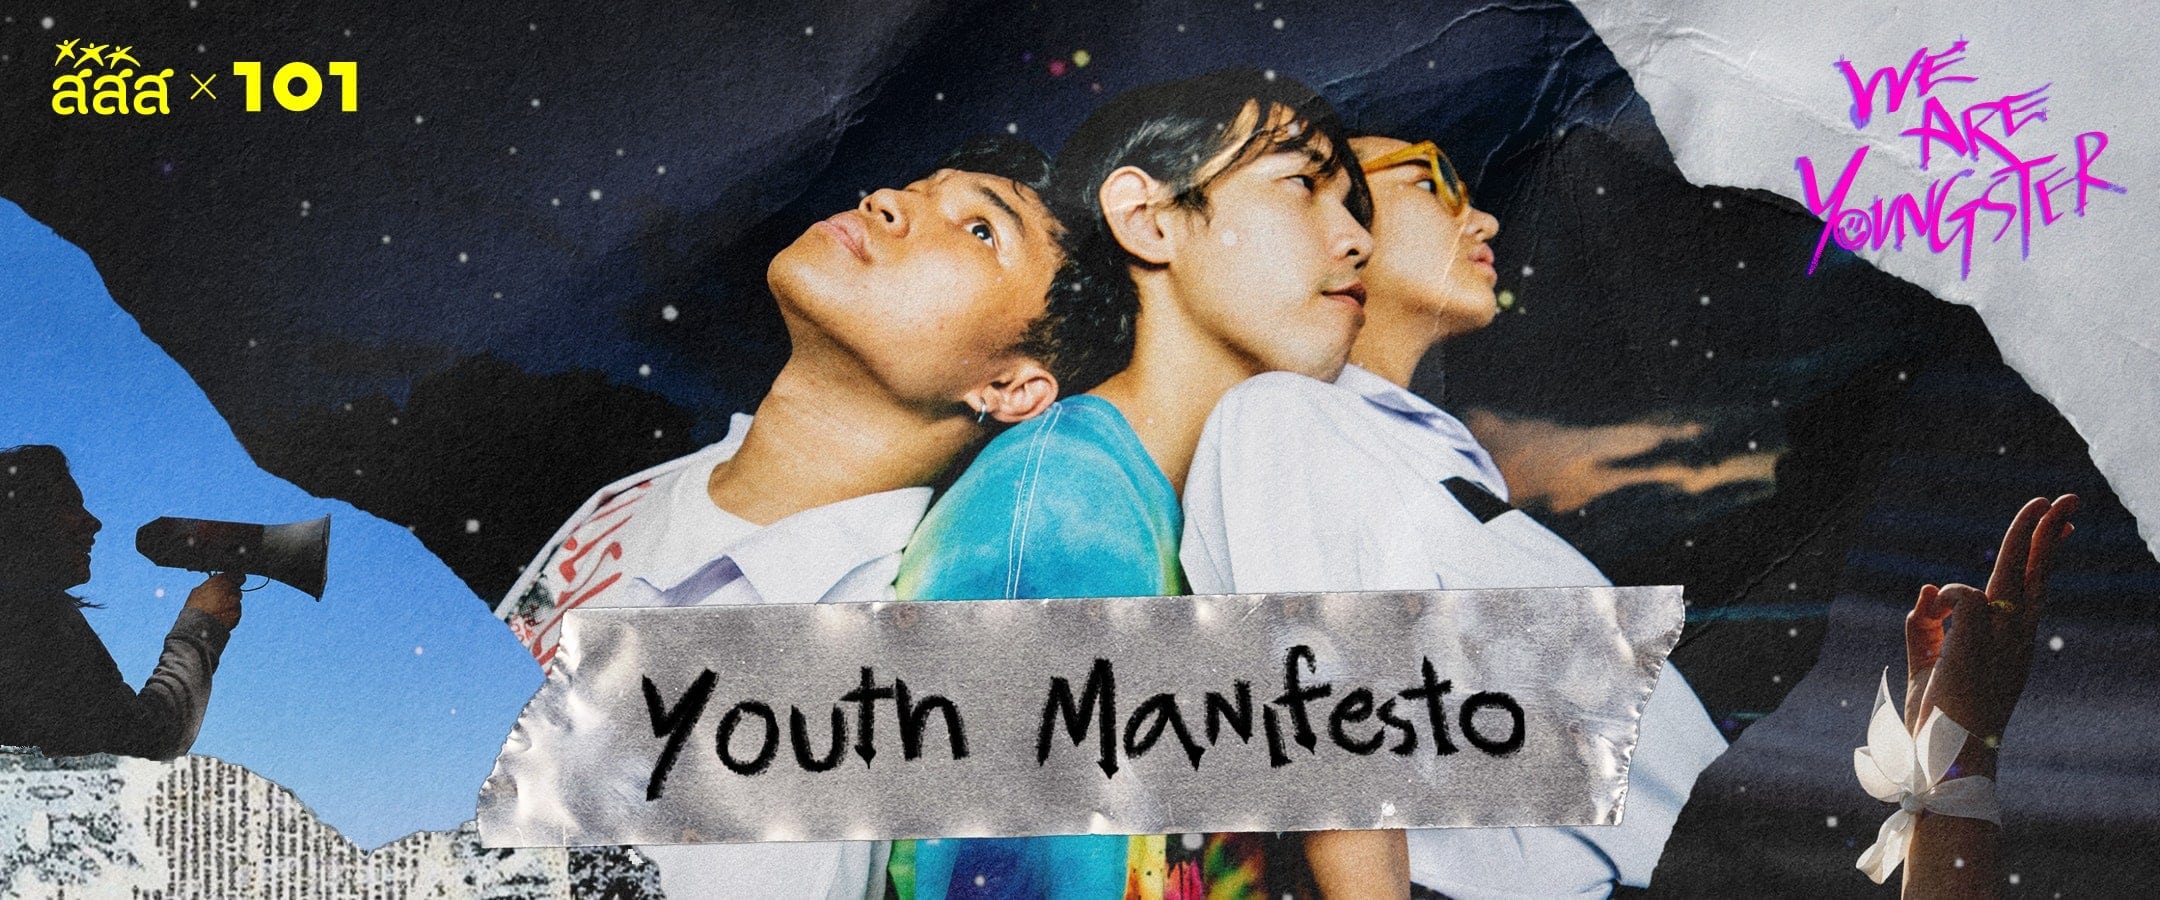 Youth Manifesto: นโยบายเยาวชนใหม่เพื่อการเมืองของคนหนุ่มสาว